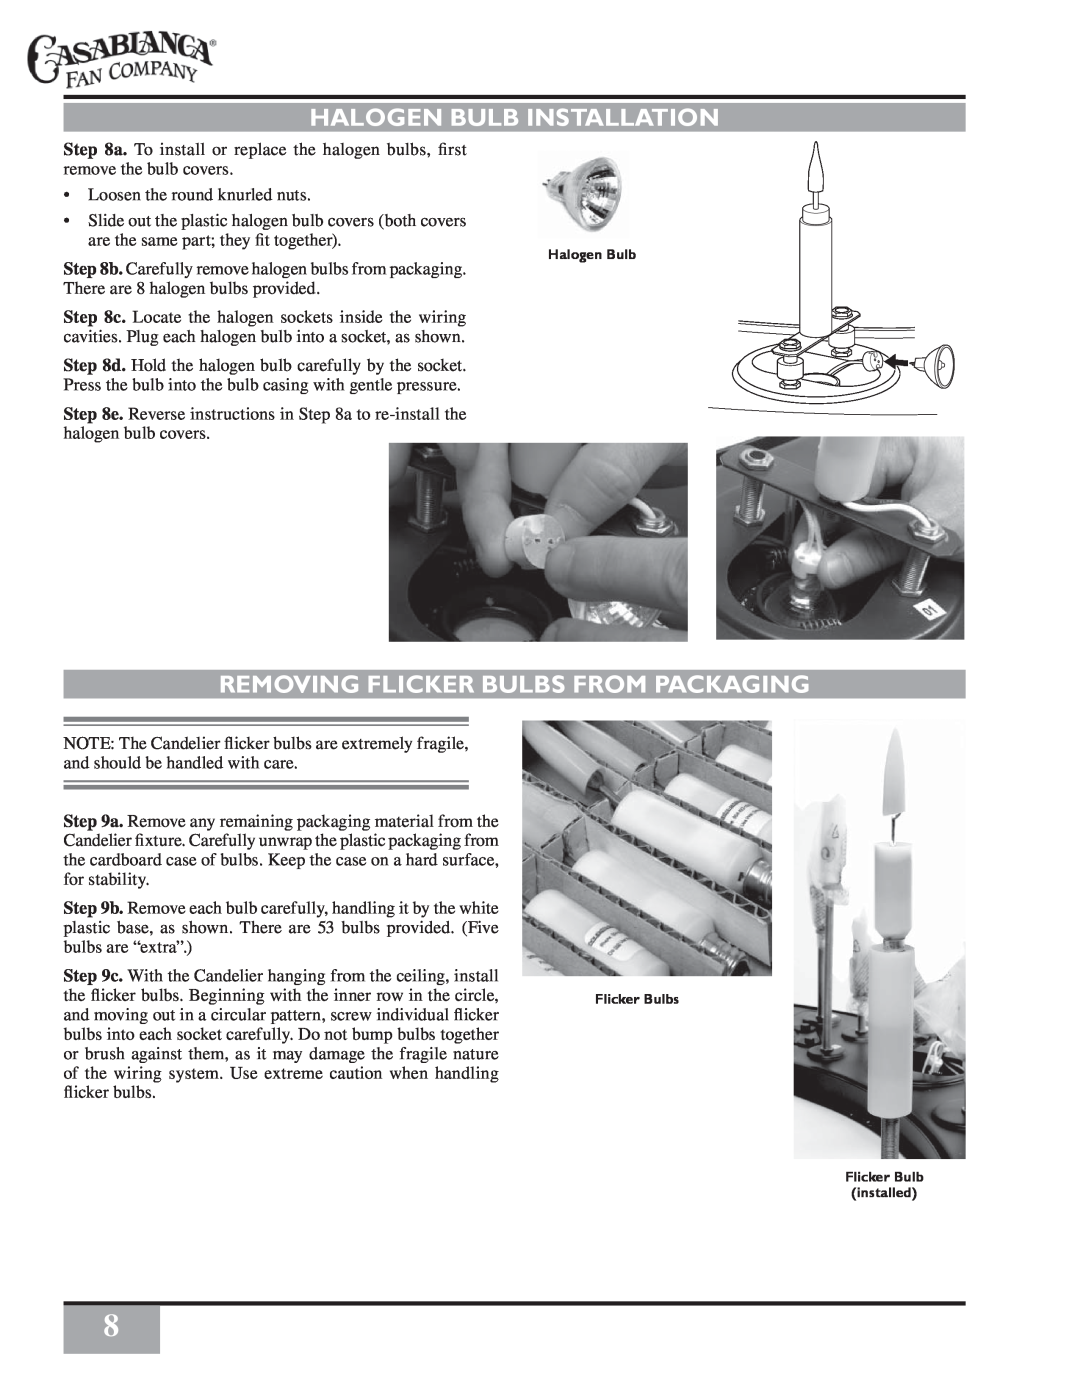 Casablanca Fan Company C16G73T owner manual Halogen Bulb Installation, Removing Flicker Bulbs From Packaging 